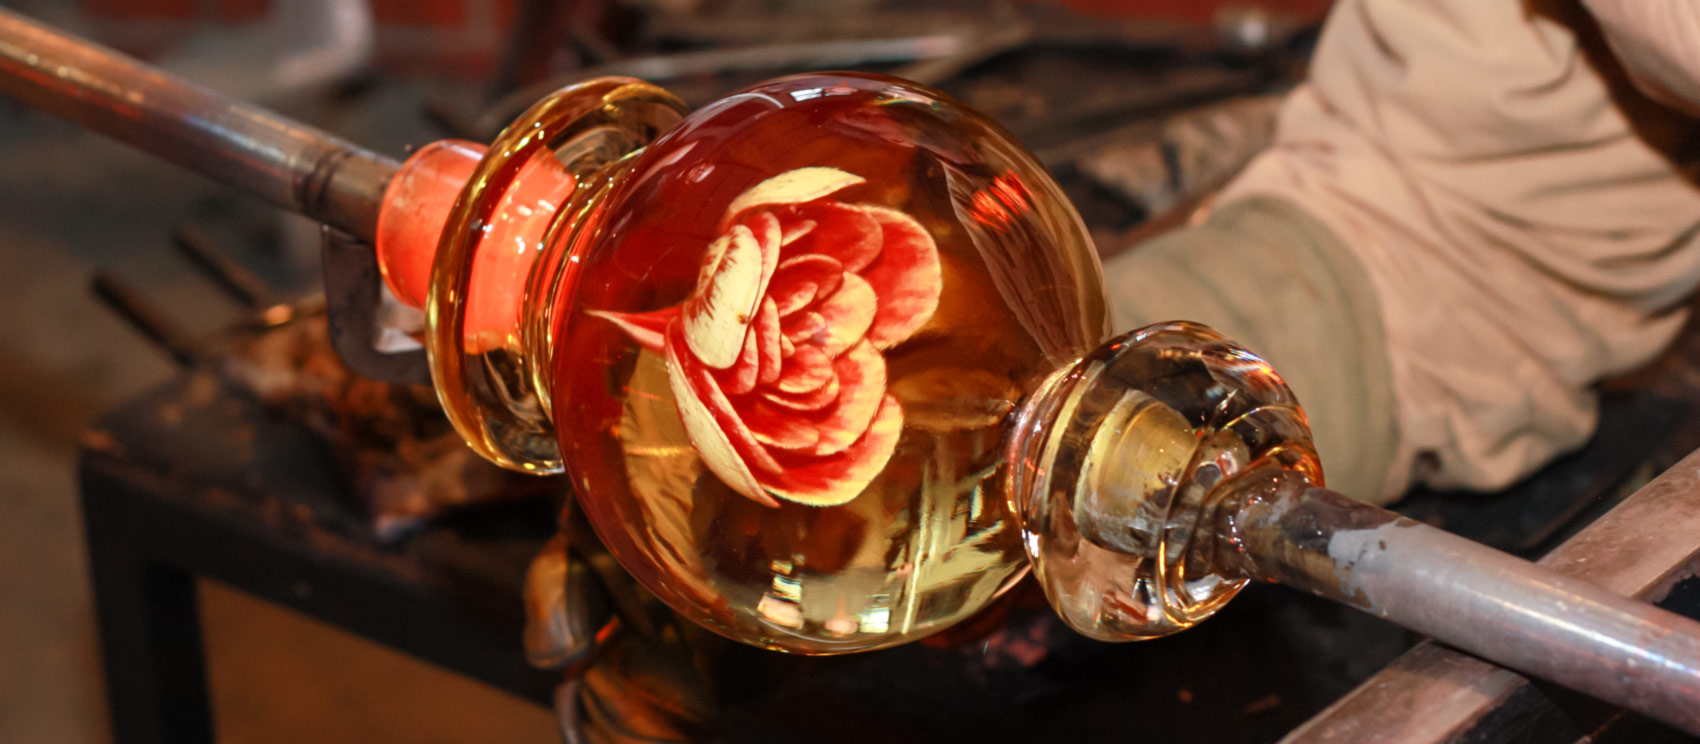 Closeup of a Glass Artist working on a Millville Rose.